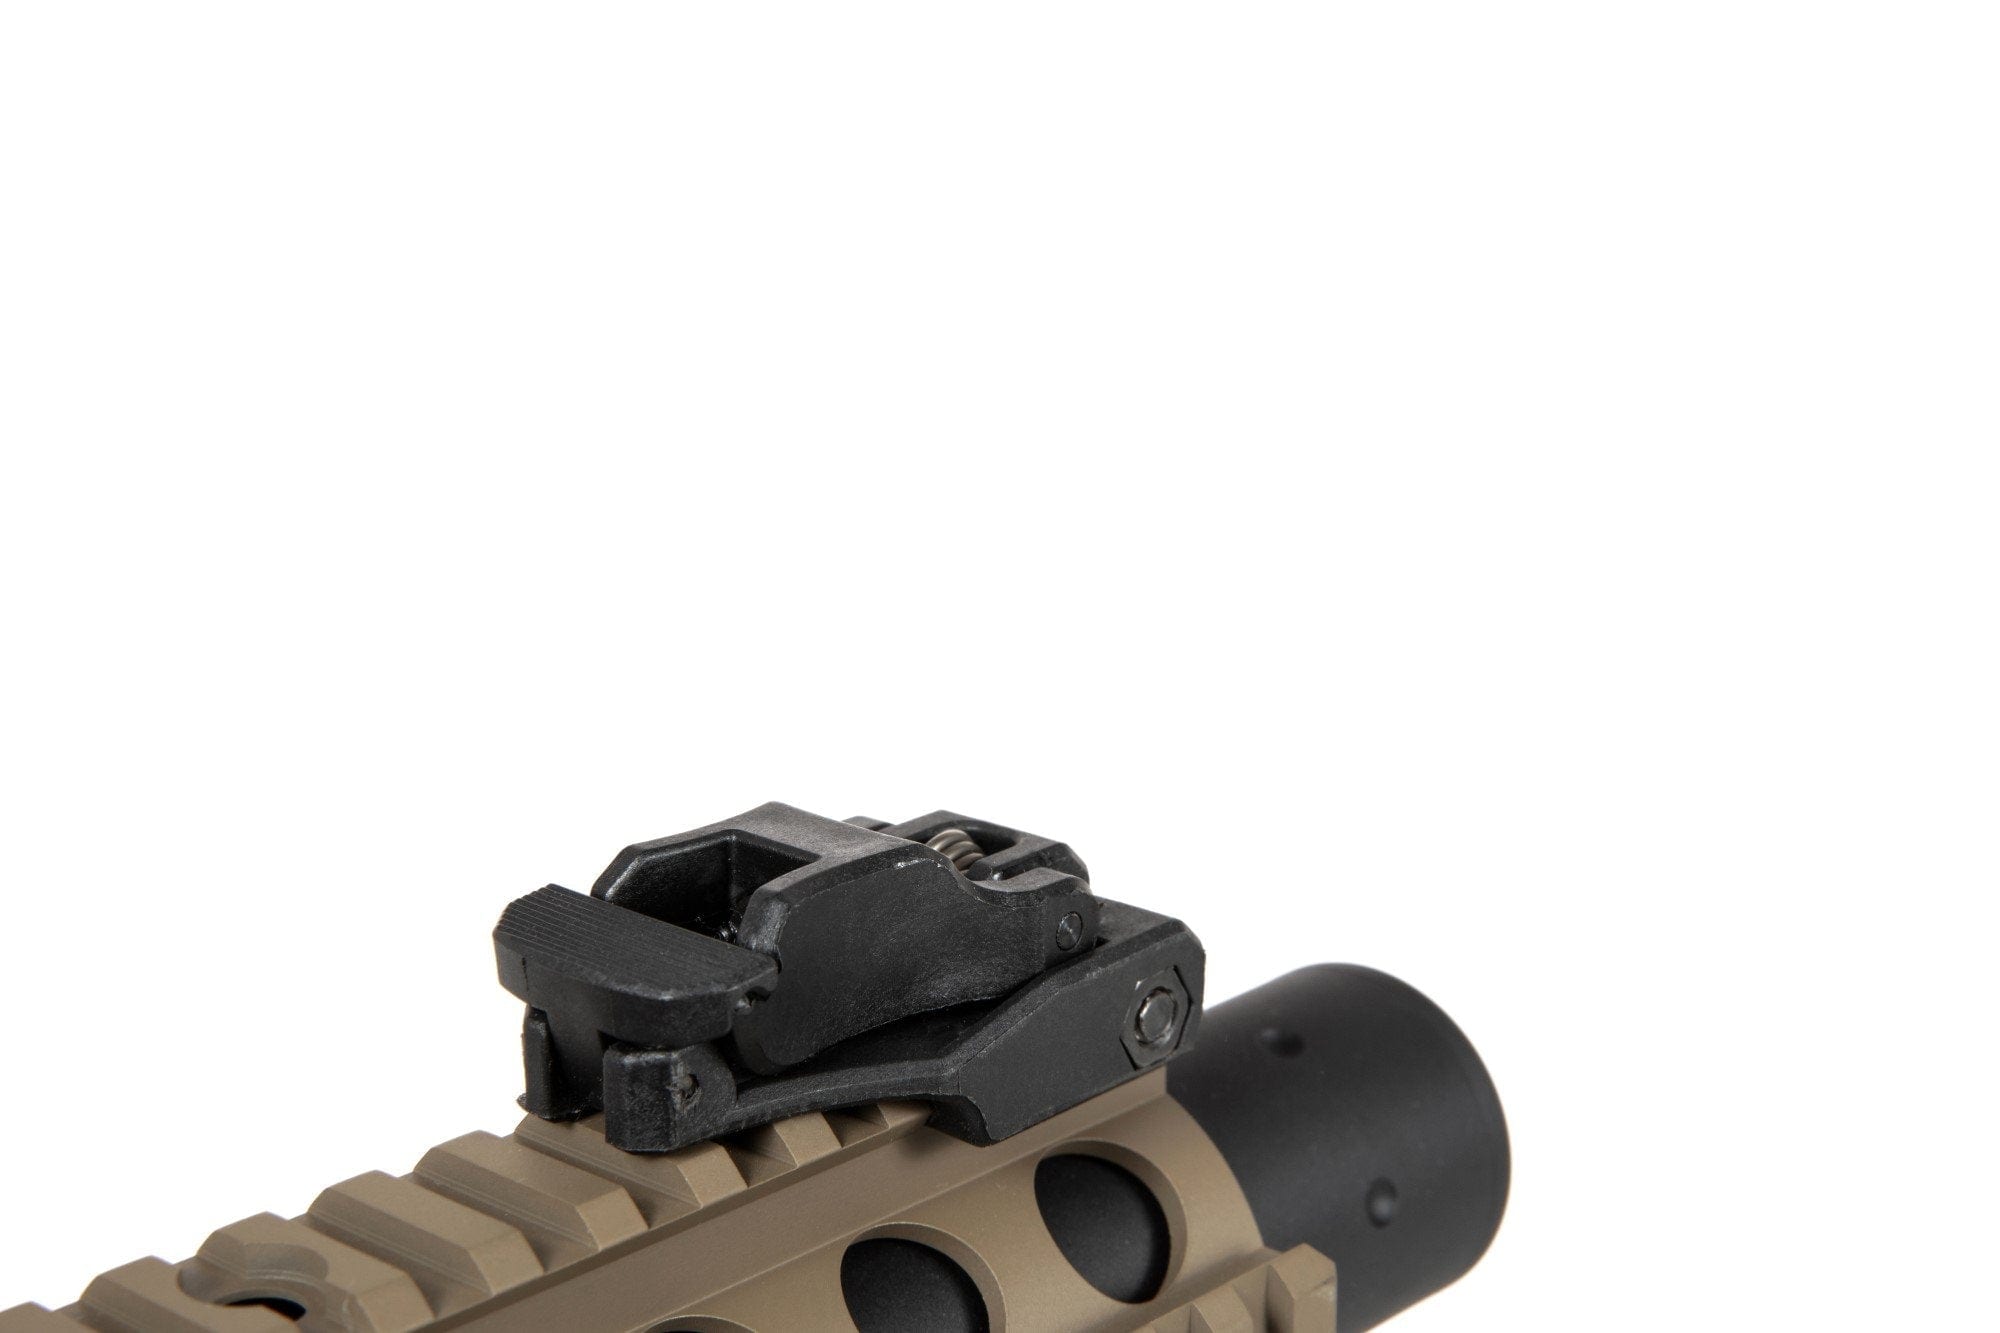 RRA SA-E05 EDGE ™ Carbine Replica - Half-Tan by Specna Arms on Airsoft Mania Europe